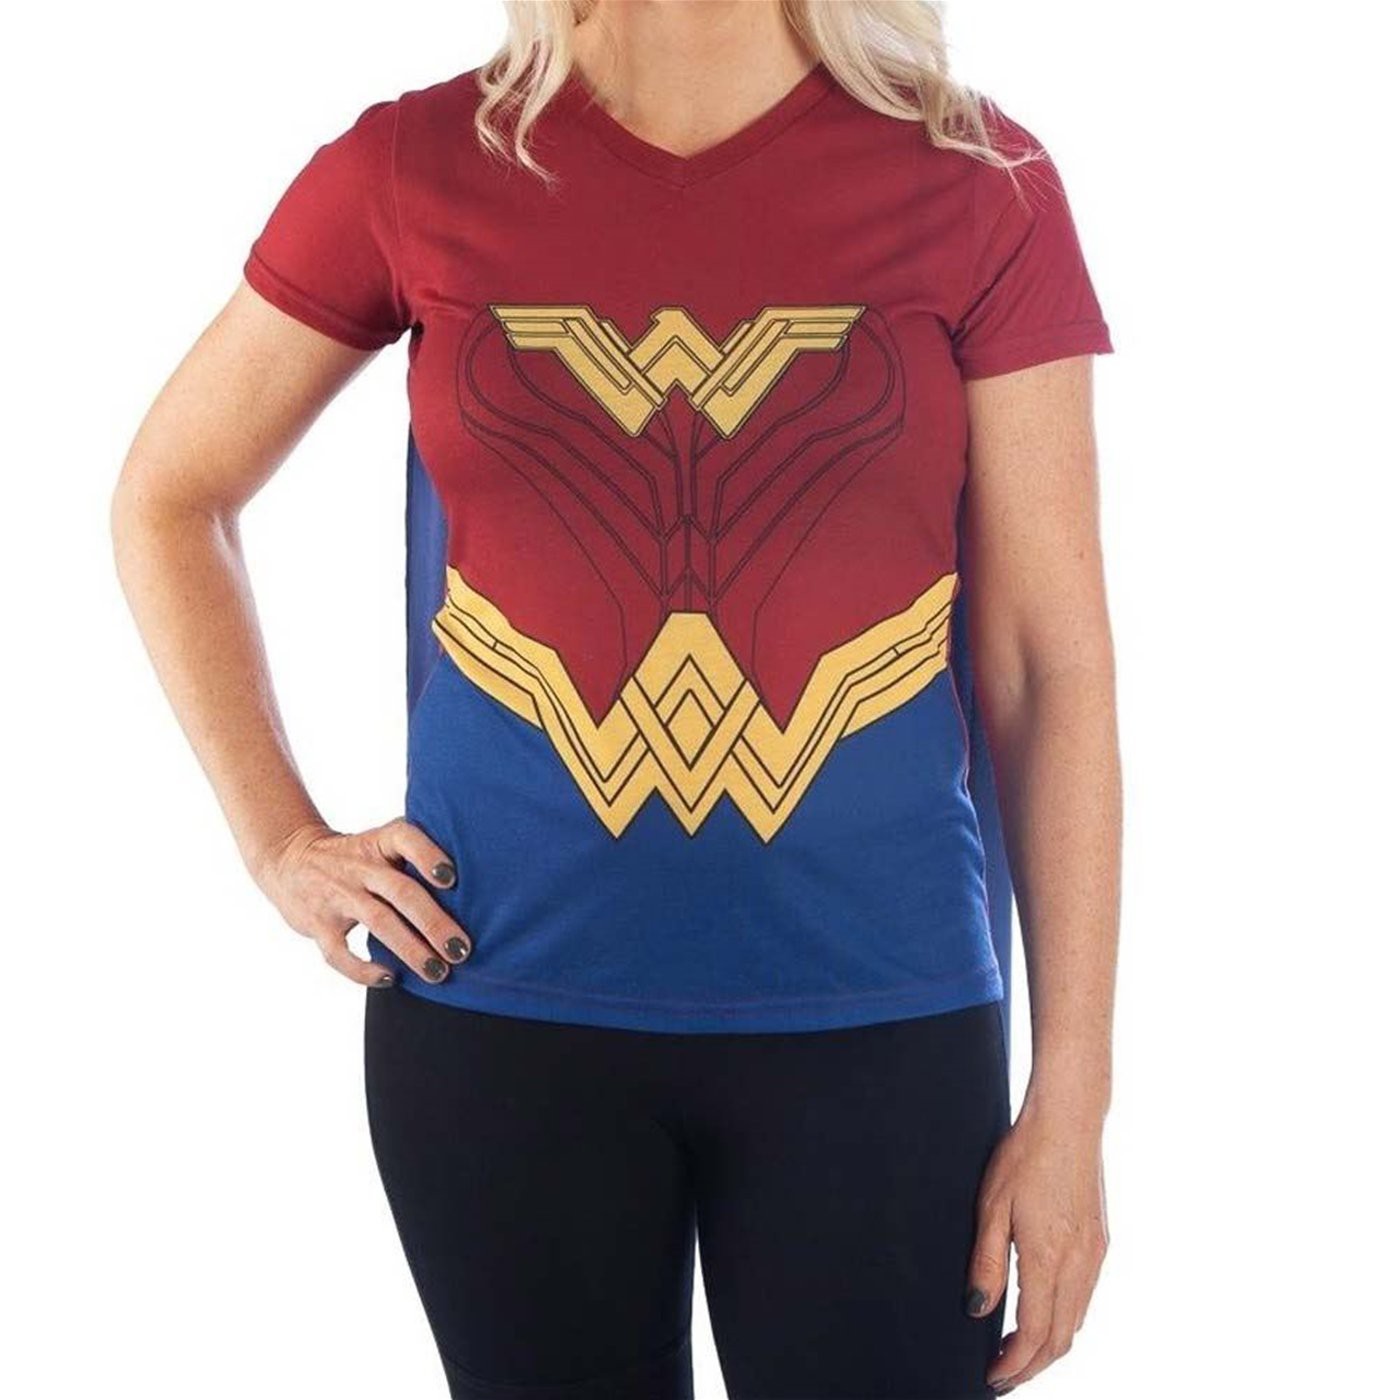 Wonder Woman Caped Costume Women's T-Shirt